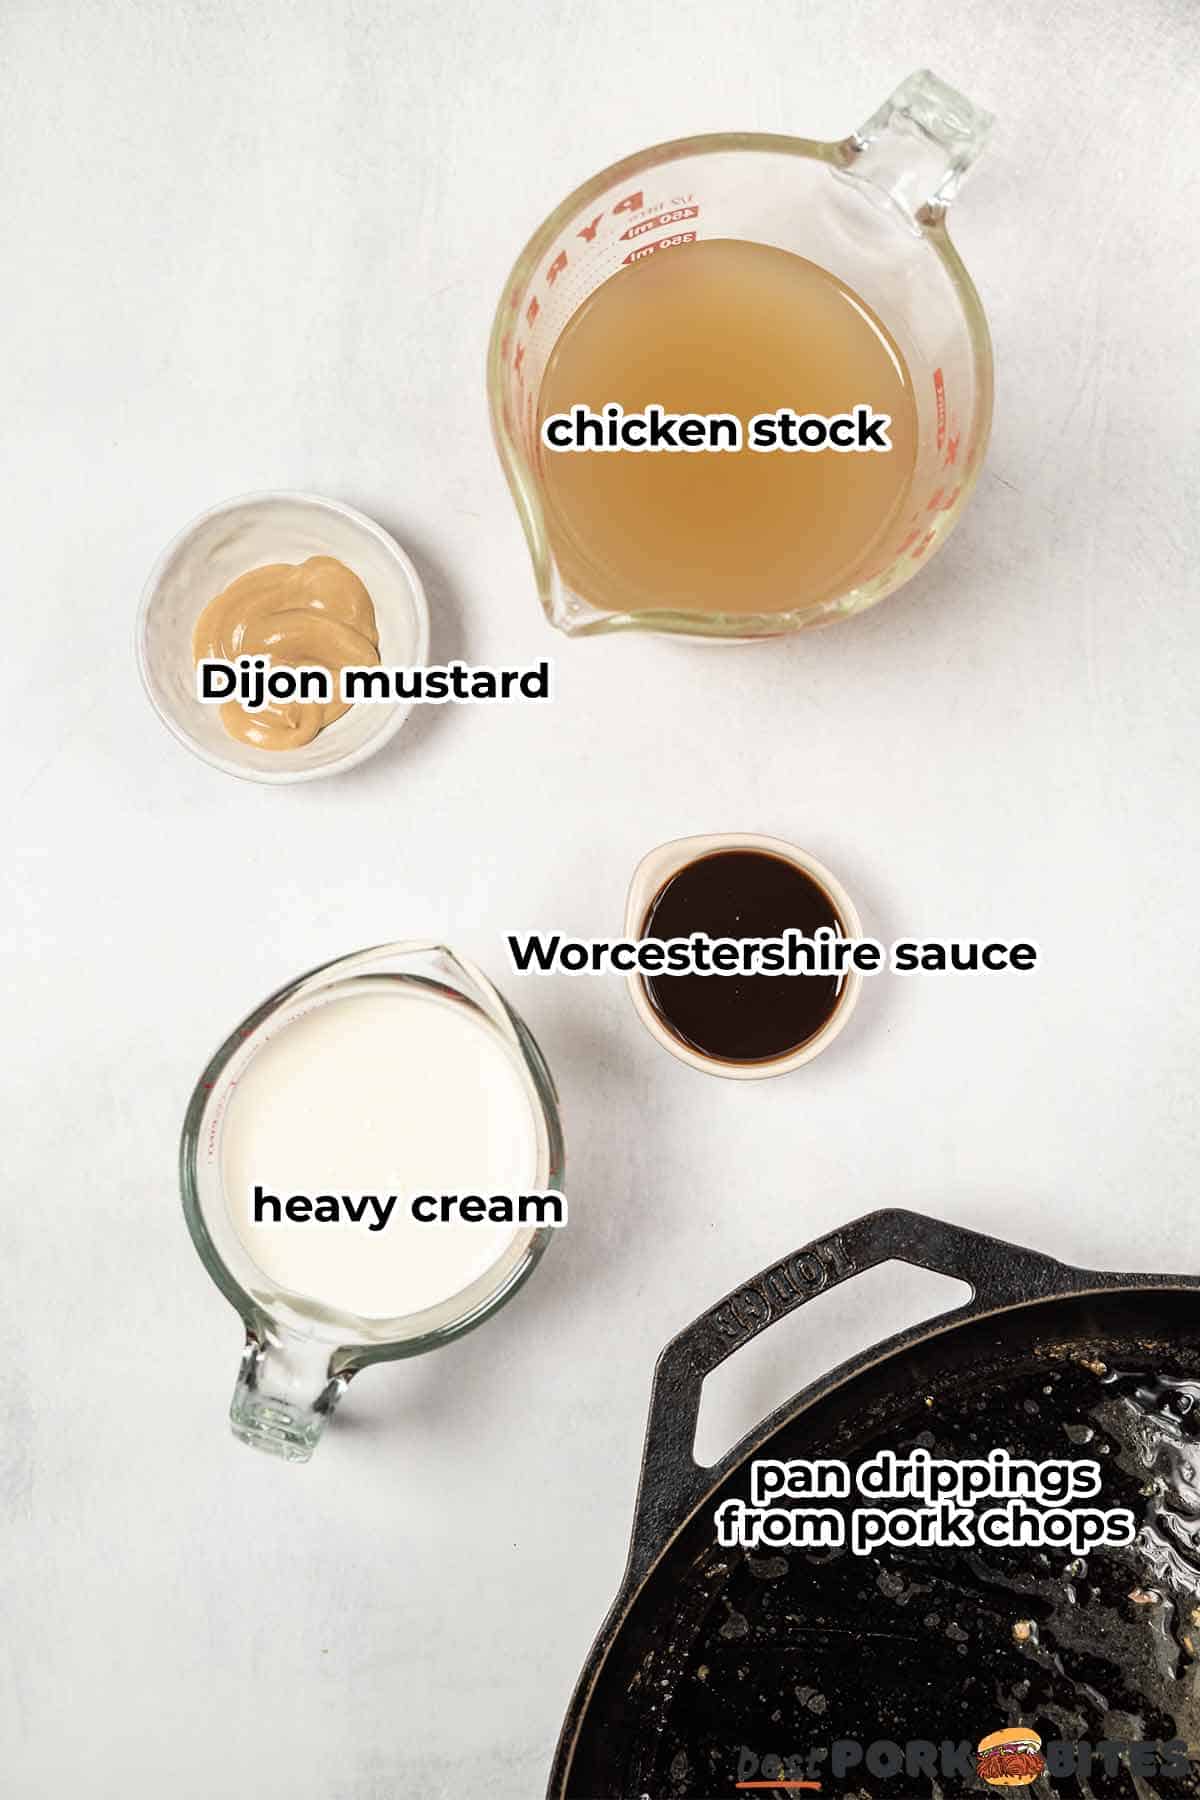 dijon mustard sauce ingredients with labels